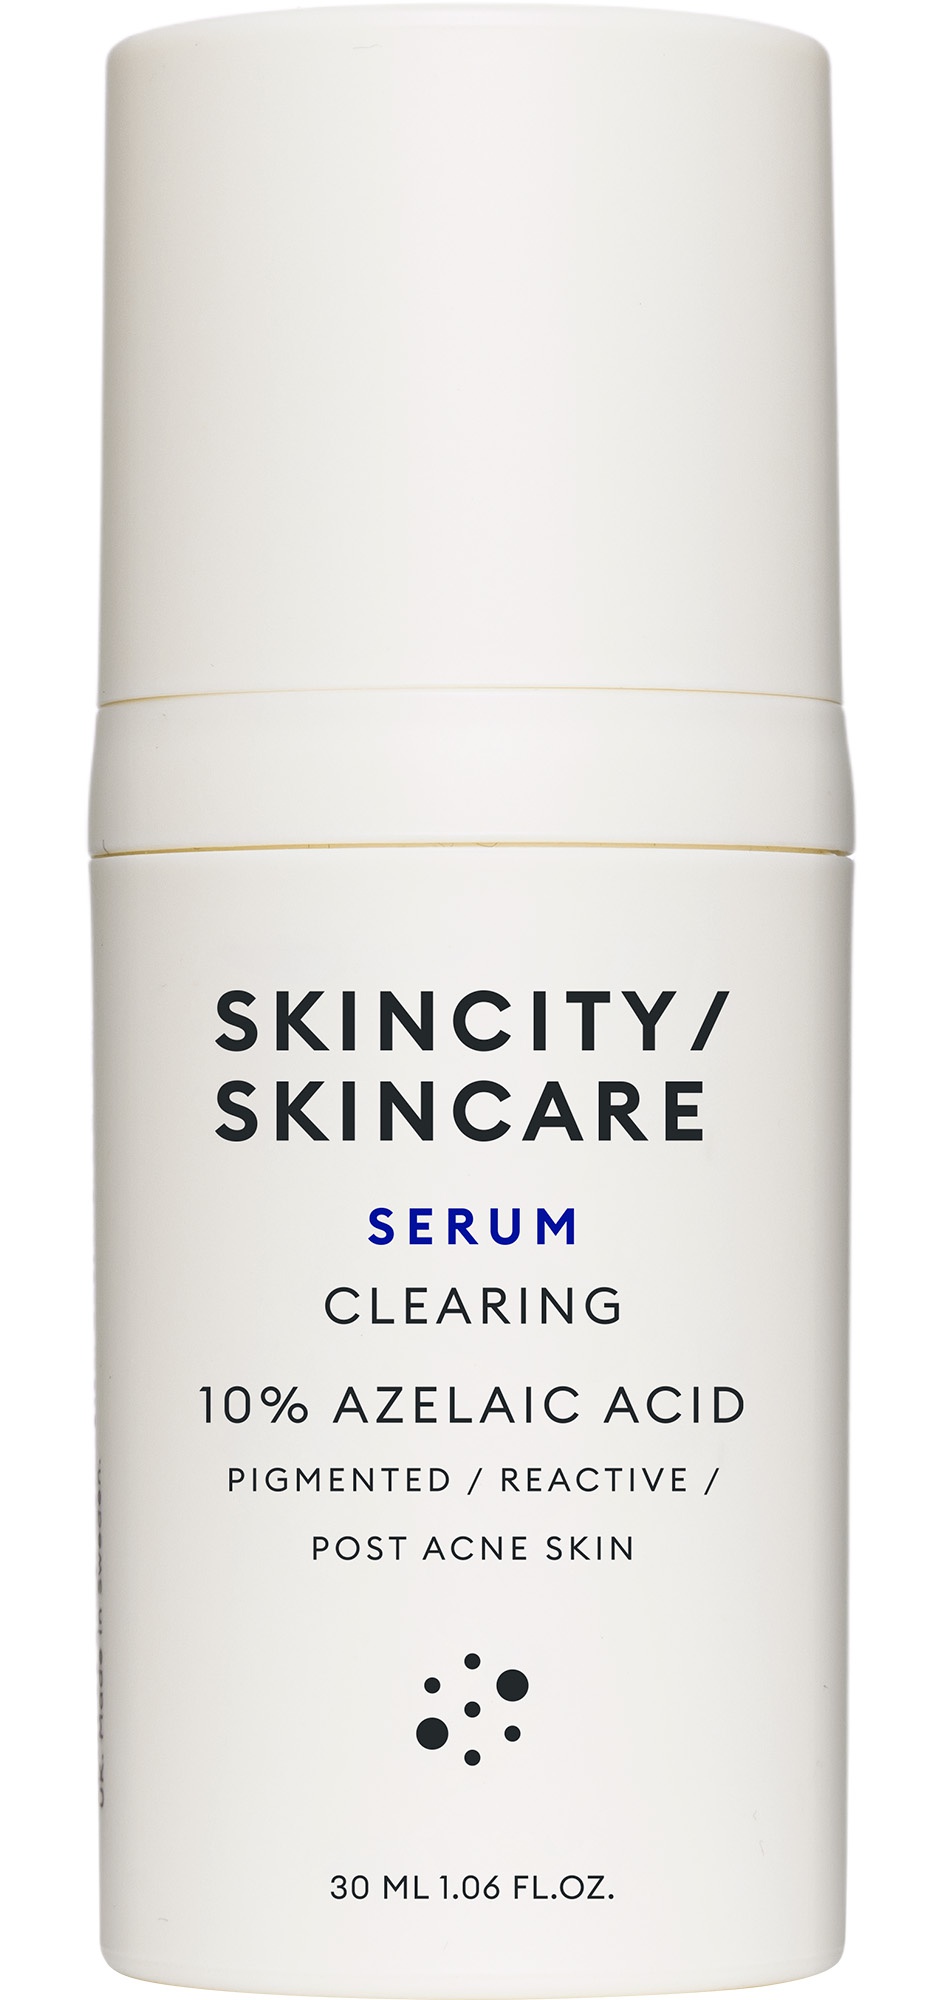 skincity skincare Clearing 10% Azelaic Acid Serum